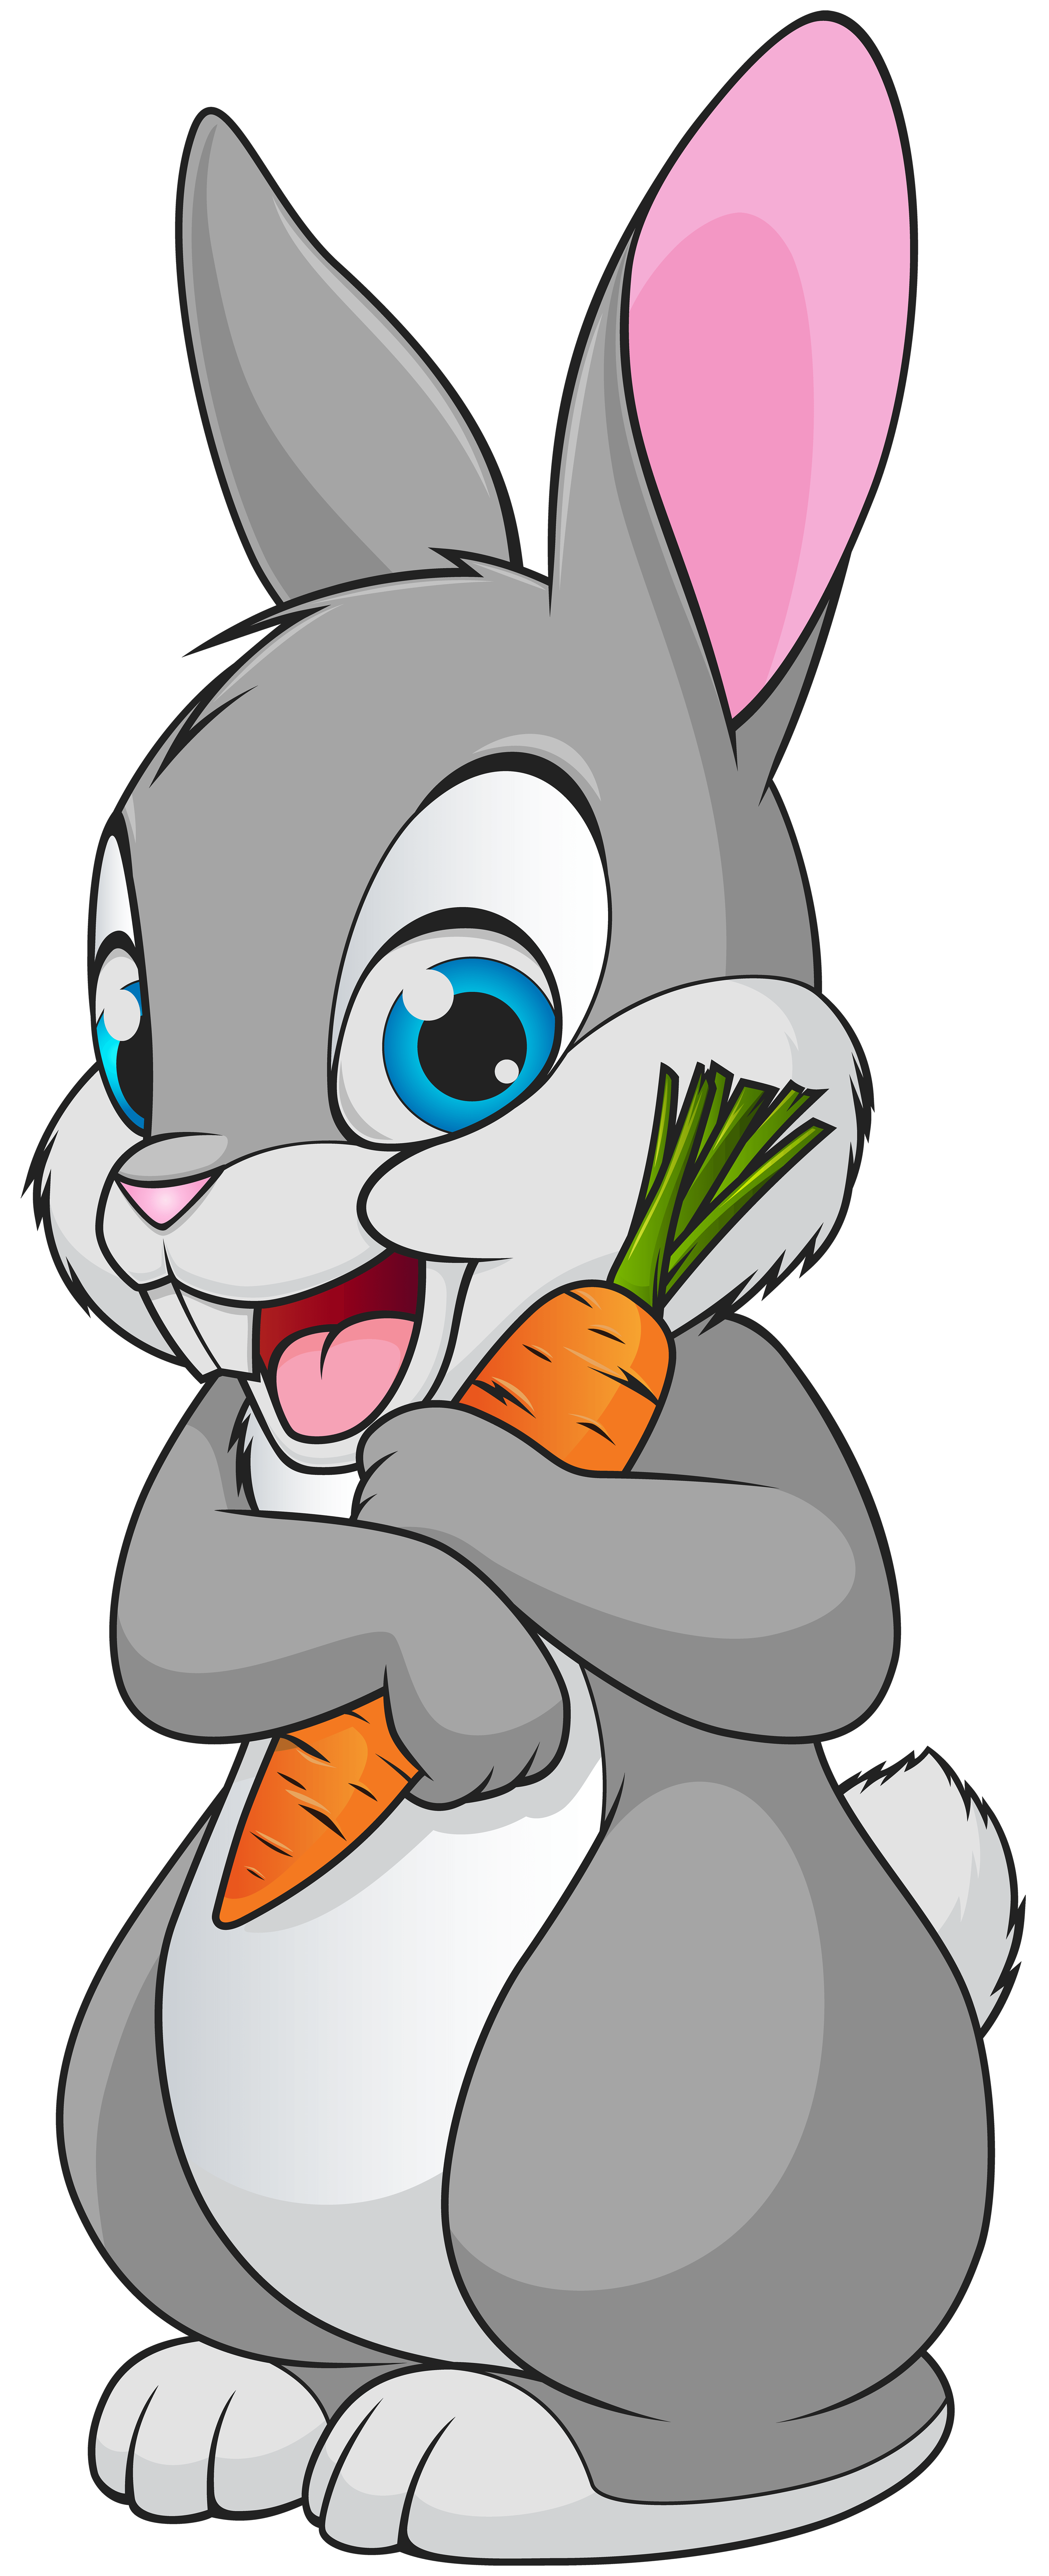 Cute Cartoon Bunny Wallpapers - Top Free Cute Cartoon Bunny Backgrounds